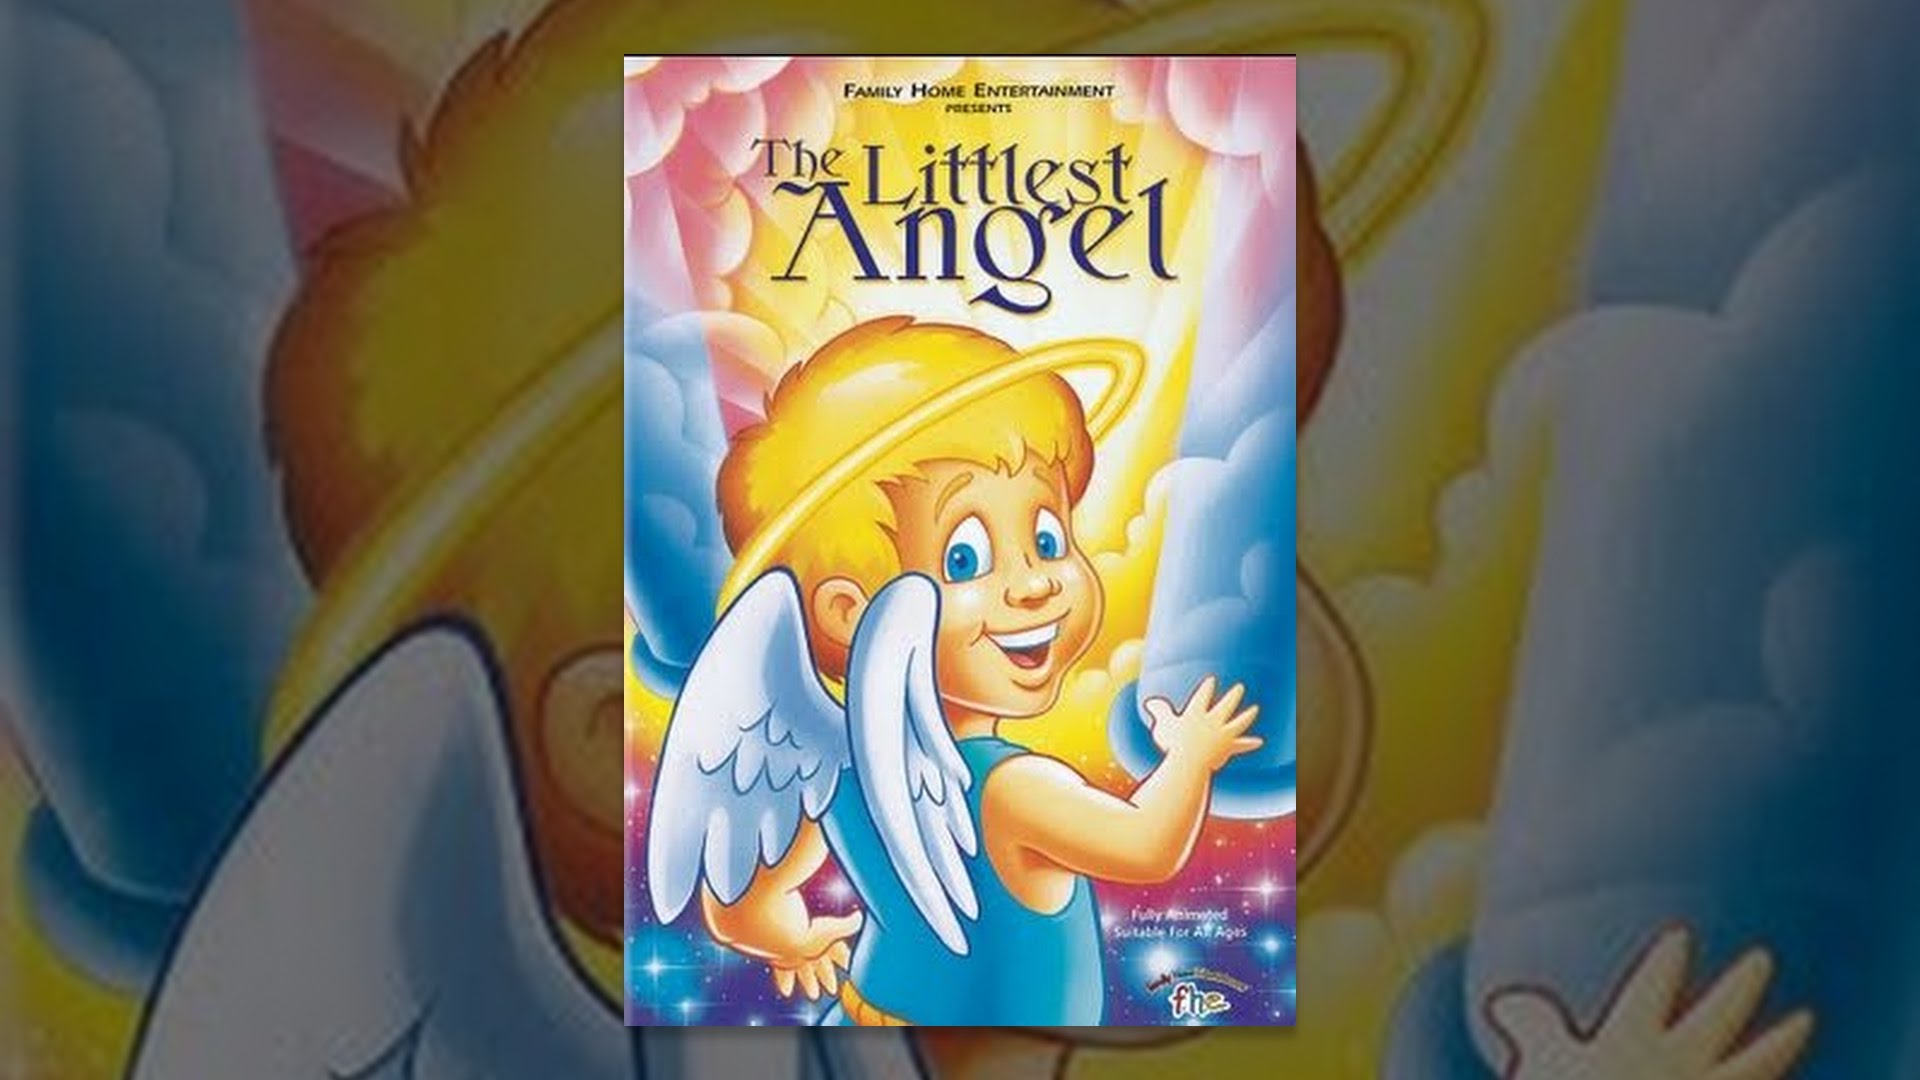 DVD the Littlest Angel 1997. The Littlest Angel 1997 Mario Jose. Nik little angel